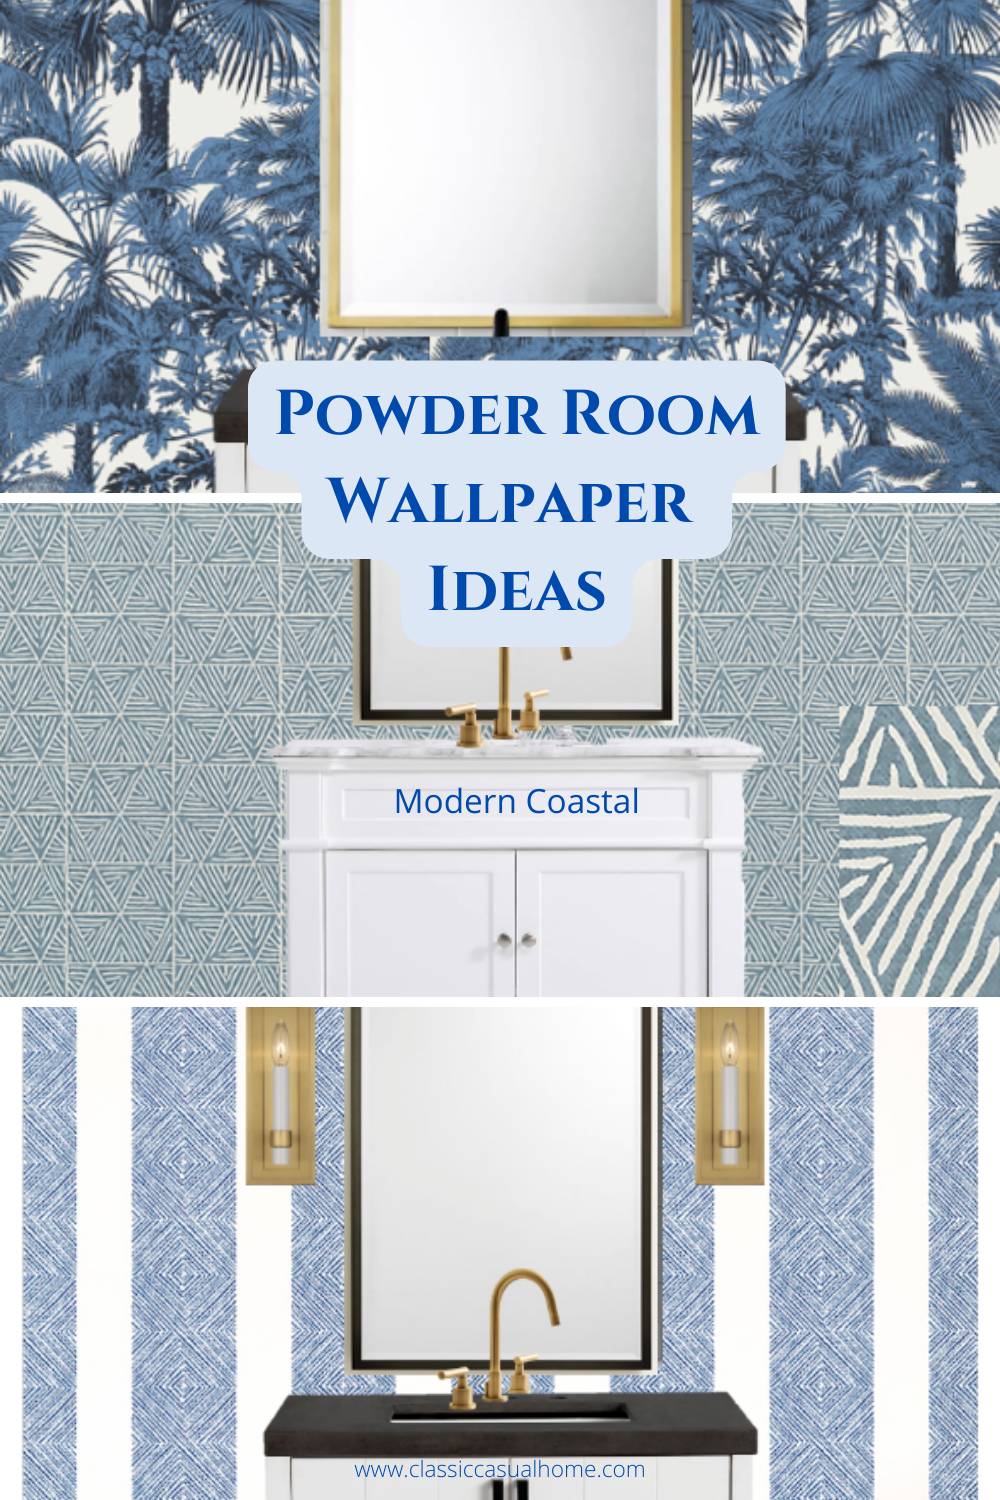 Pretty Wallpaper Ideas For A Powder Room